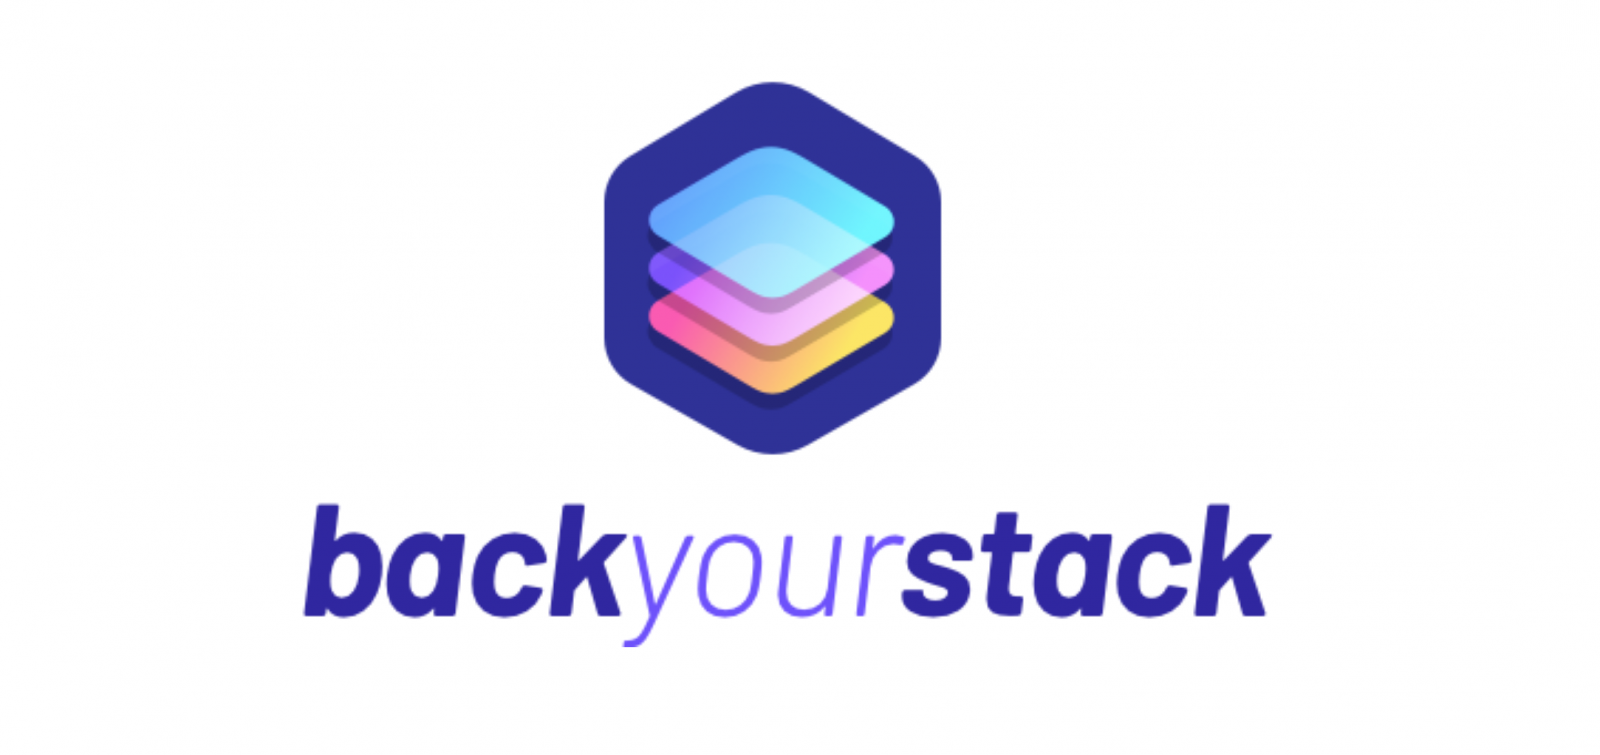 OSI Joins as a BackYourStack Partner